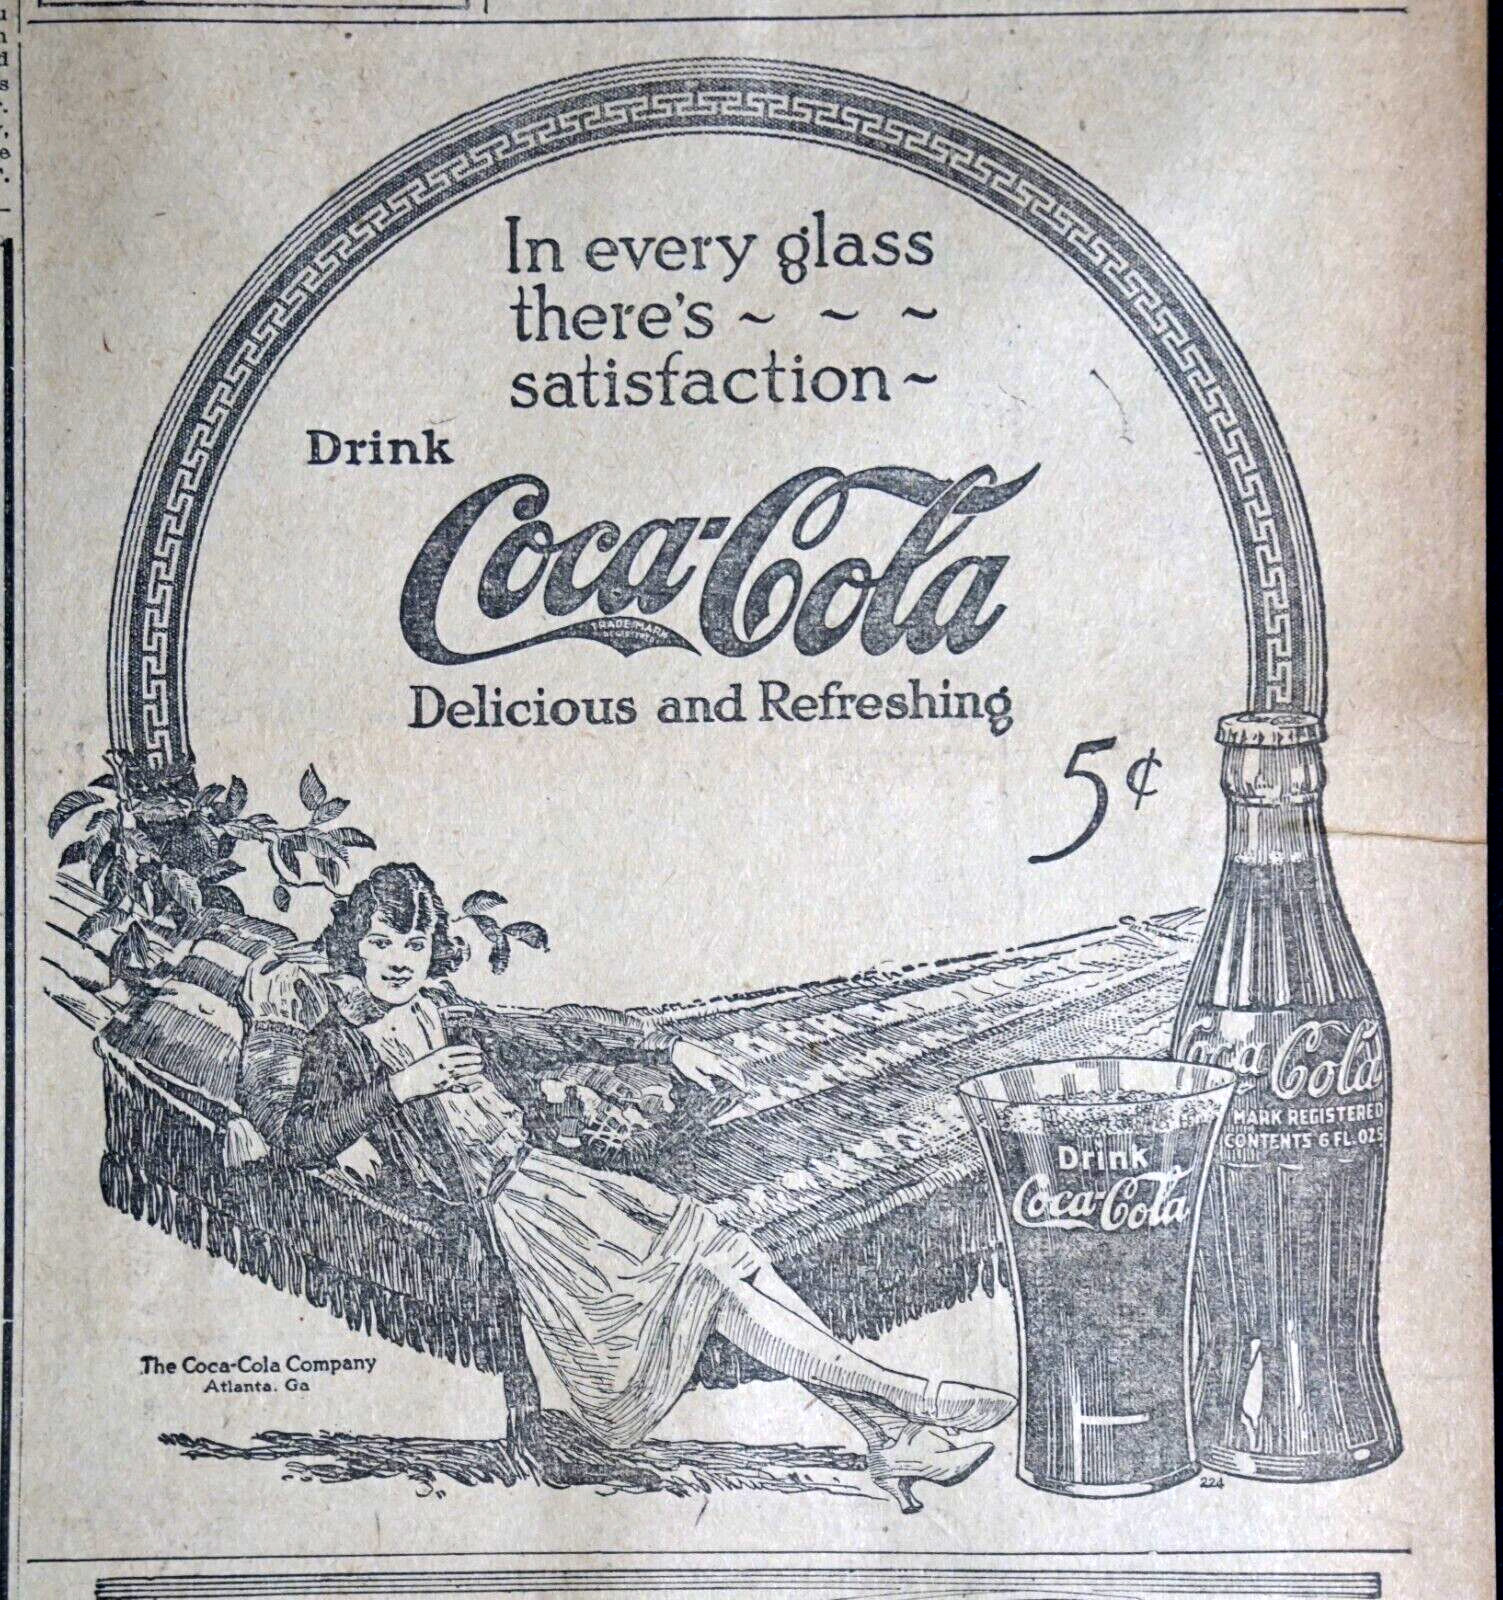 Lot of 3 - 1922 Burlington Vermont Newspaper Pages Containing Coca Cola Ads